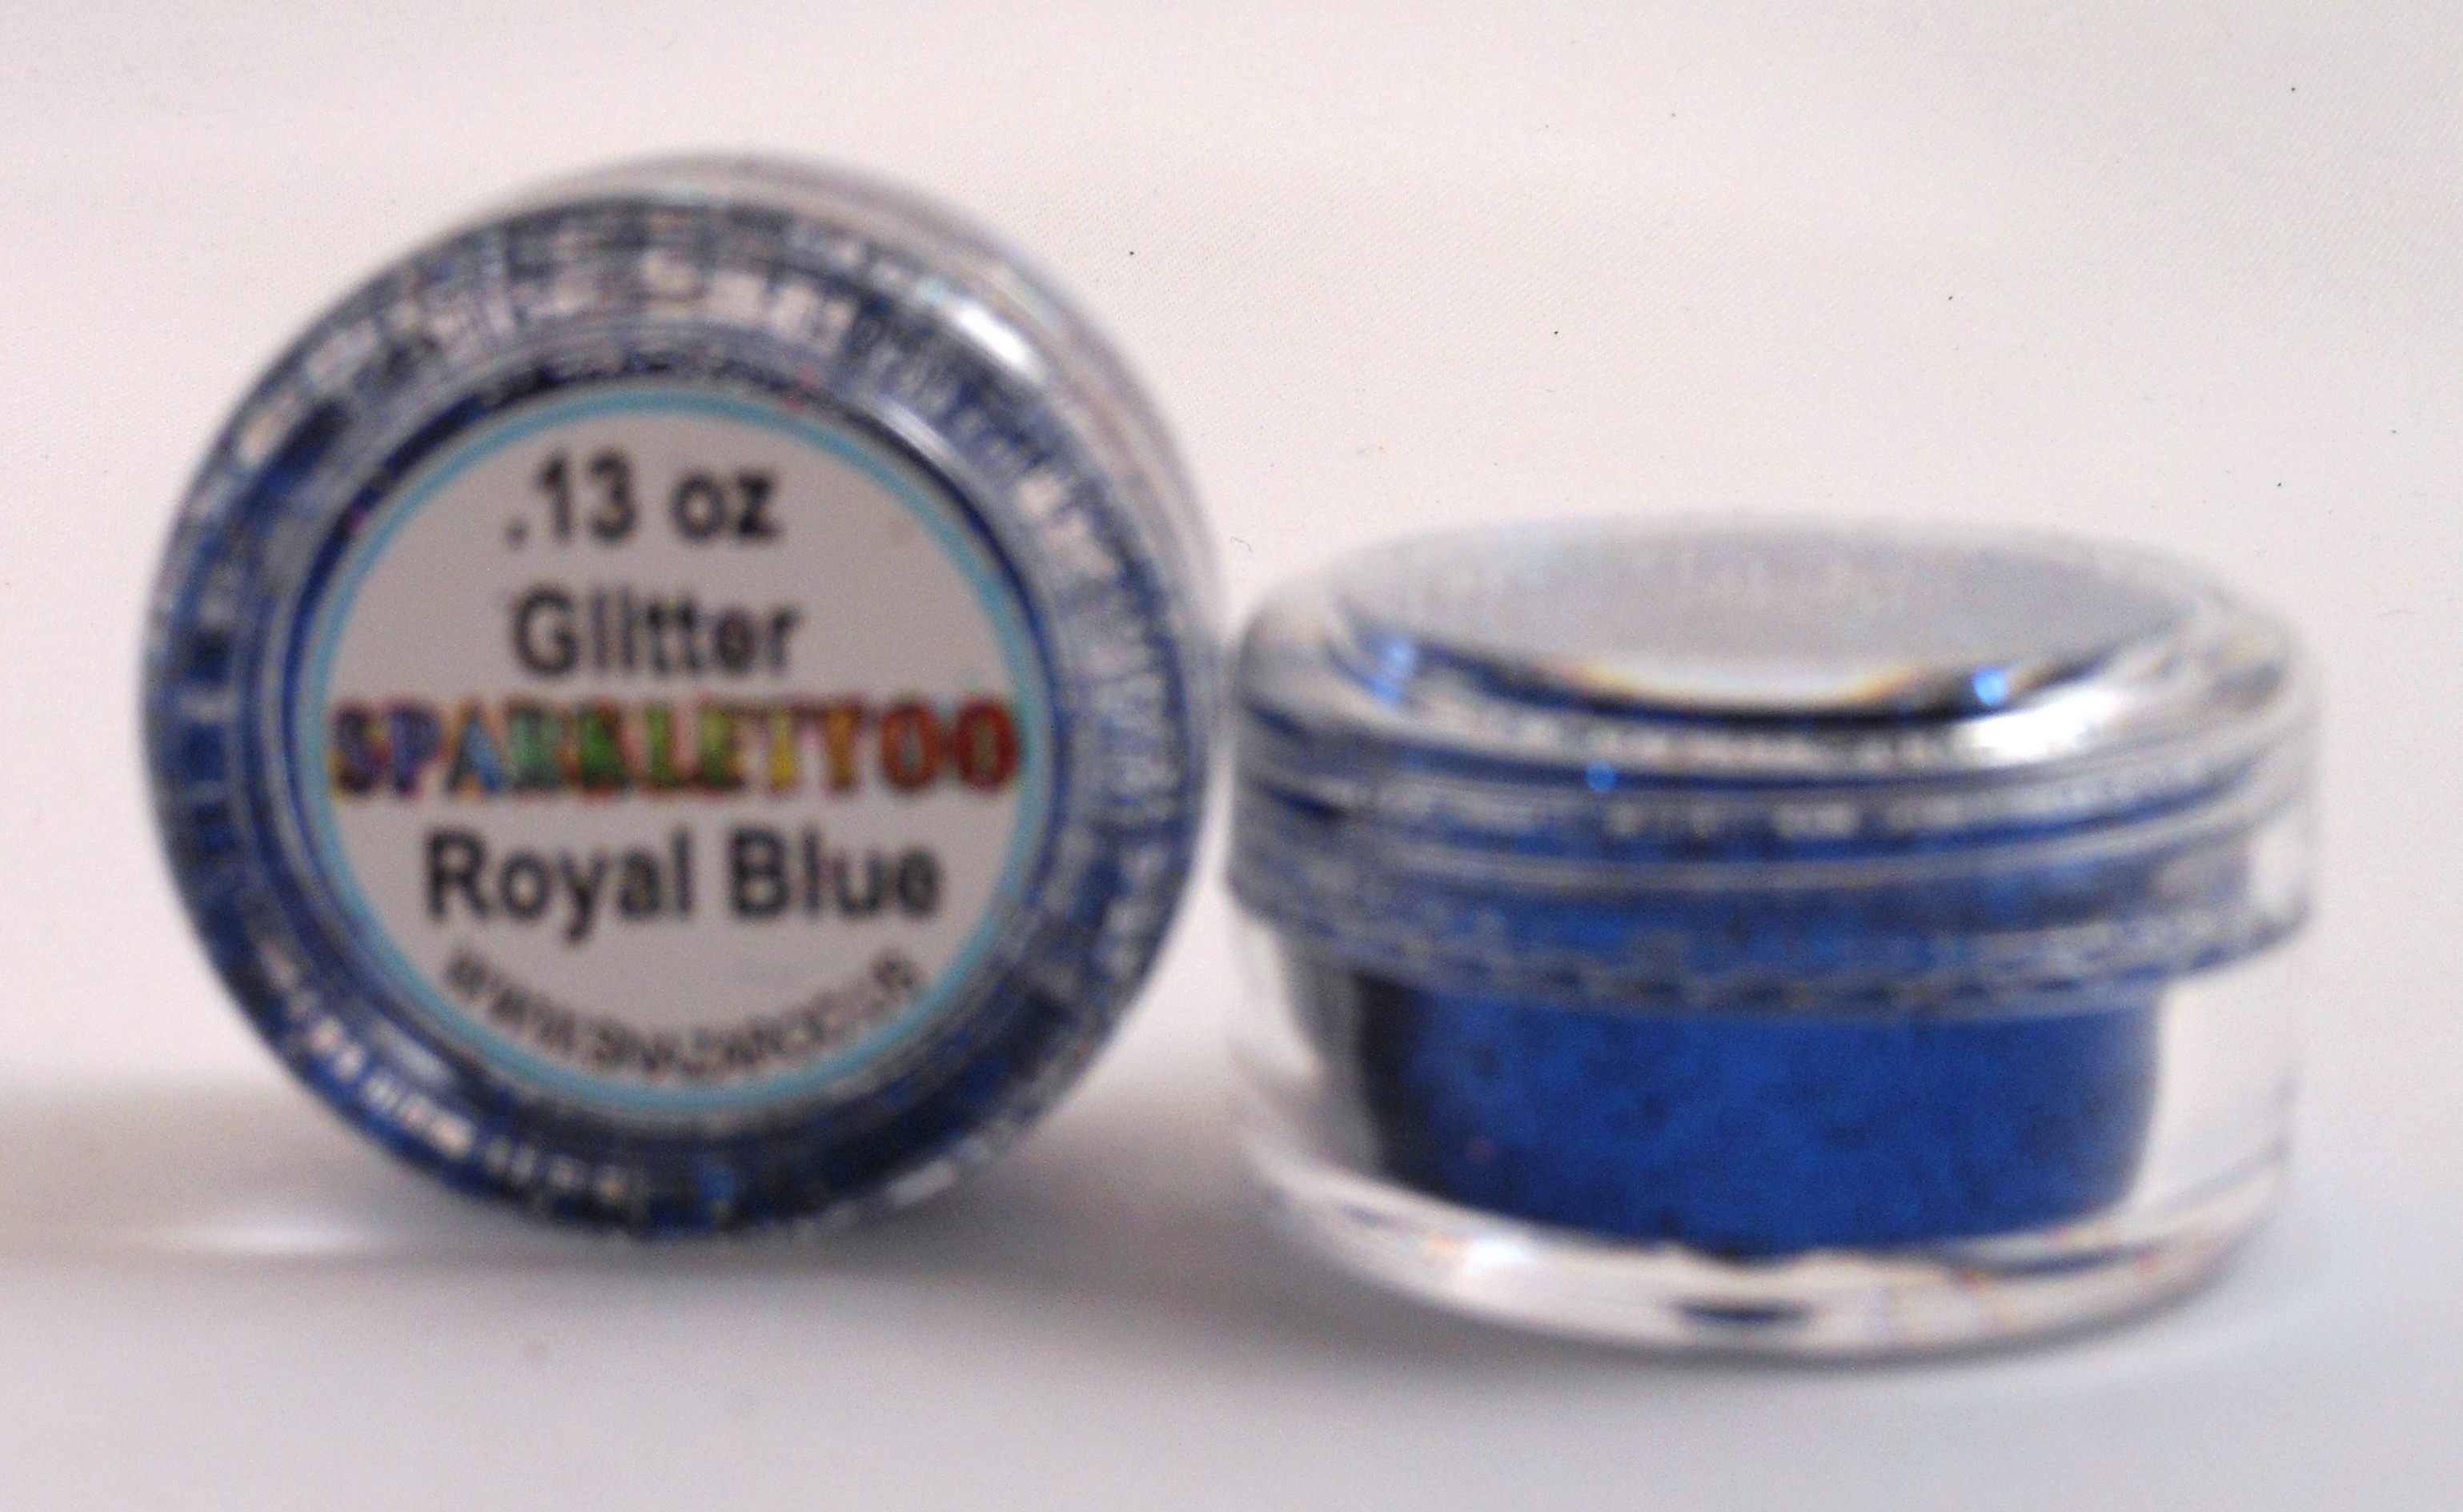 Glitter Royal Blue .13 oz. 